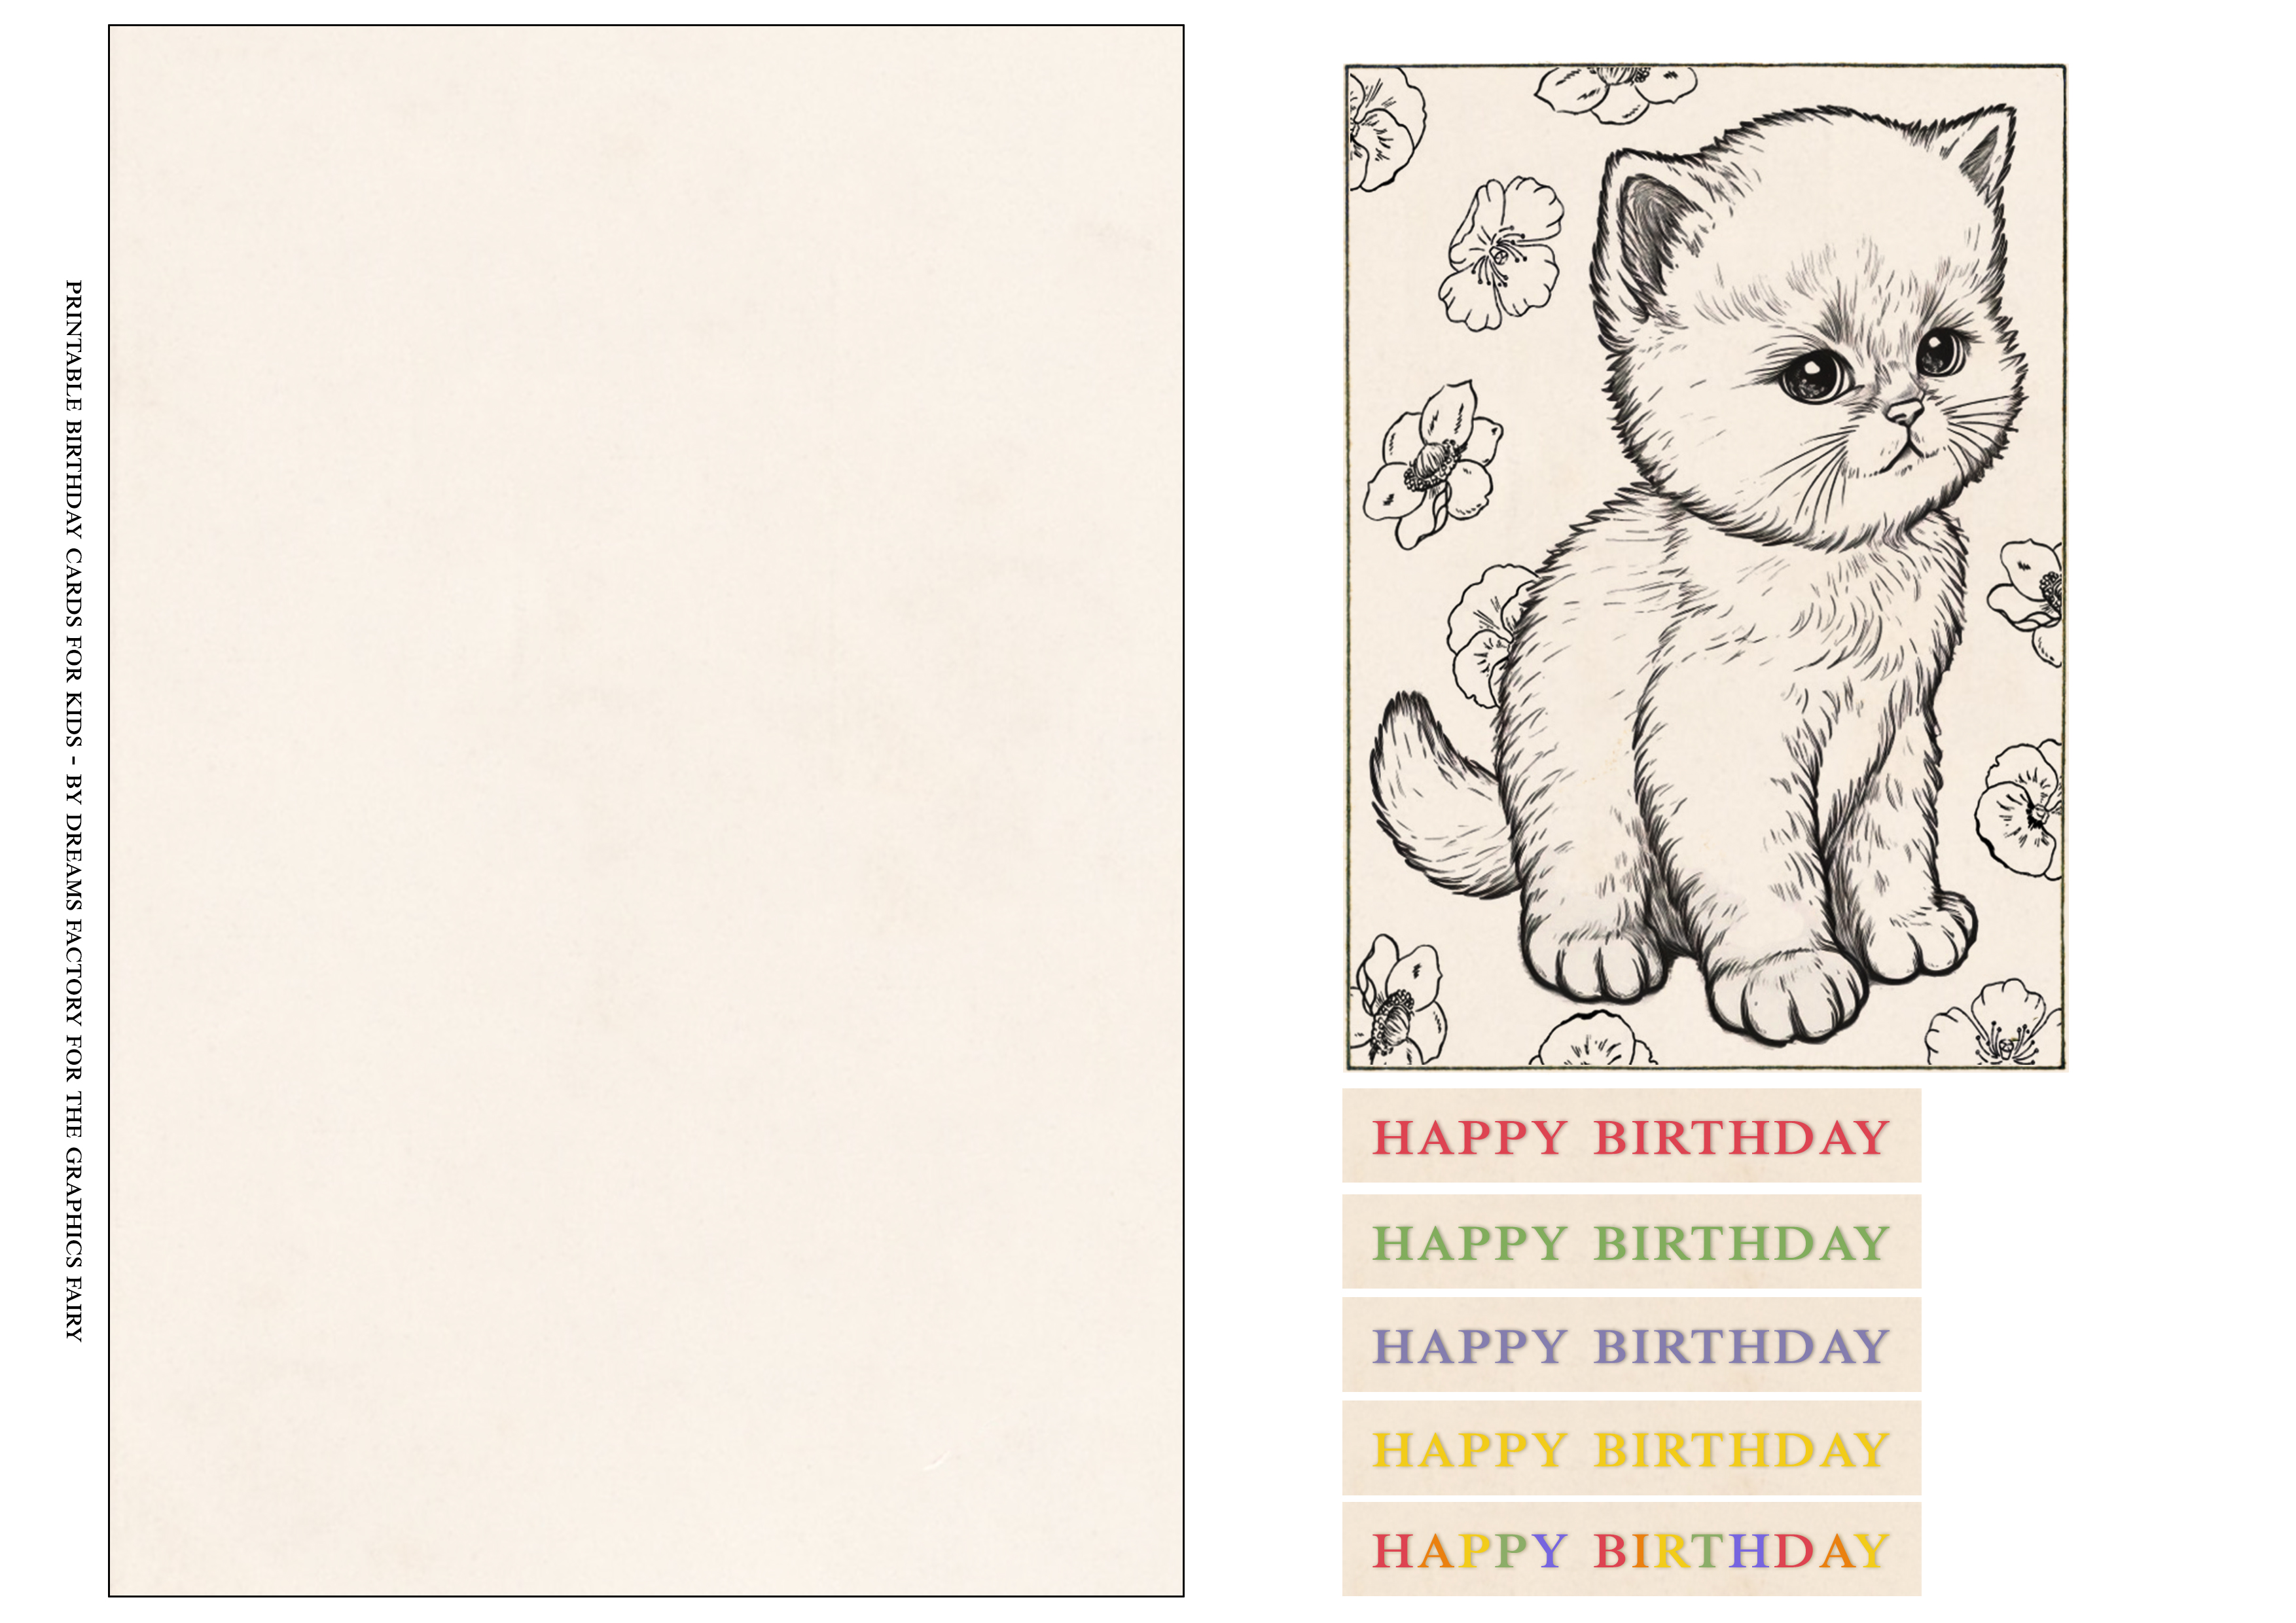 Printable birthday cards for kids - kitten printable